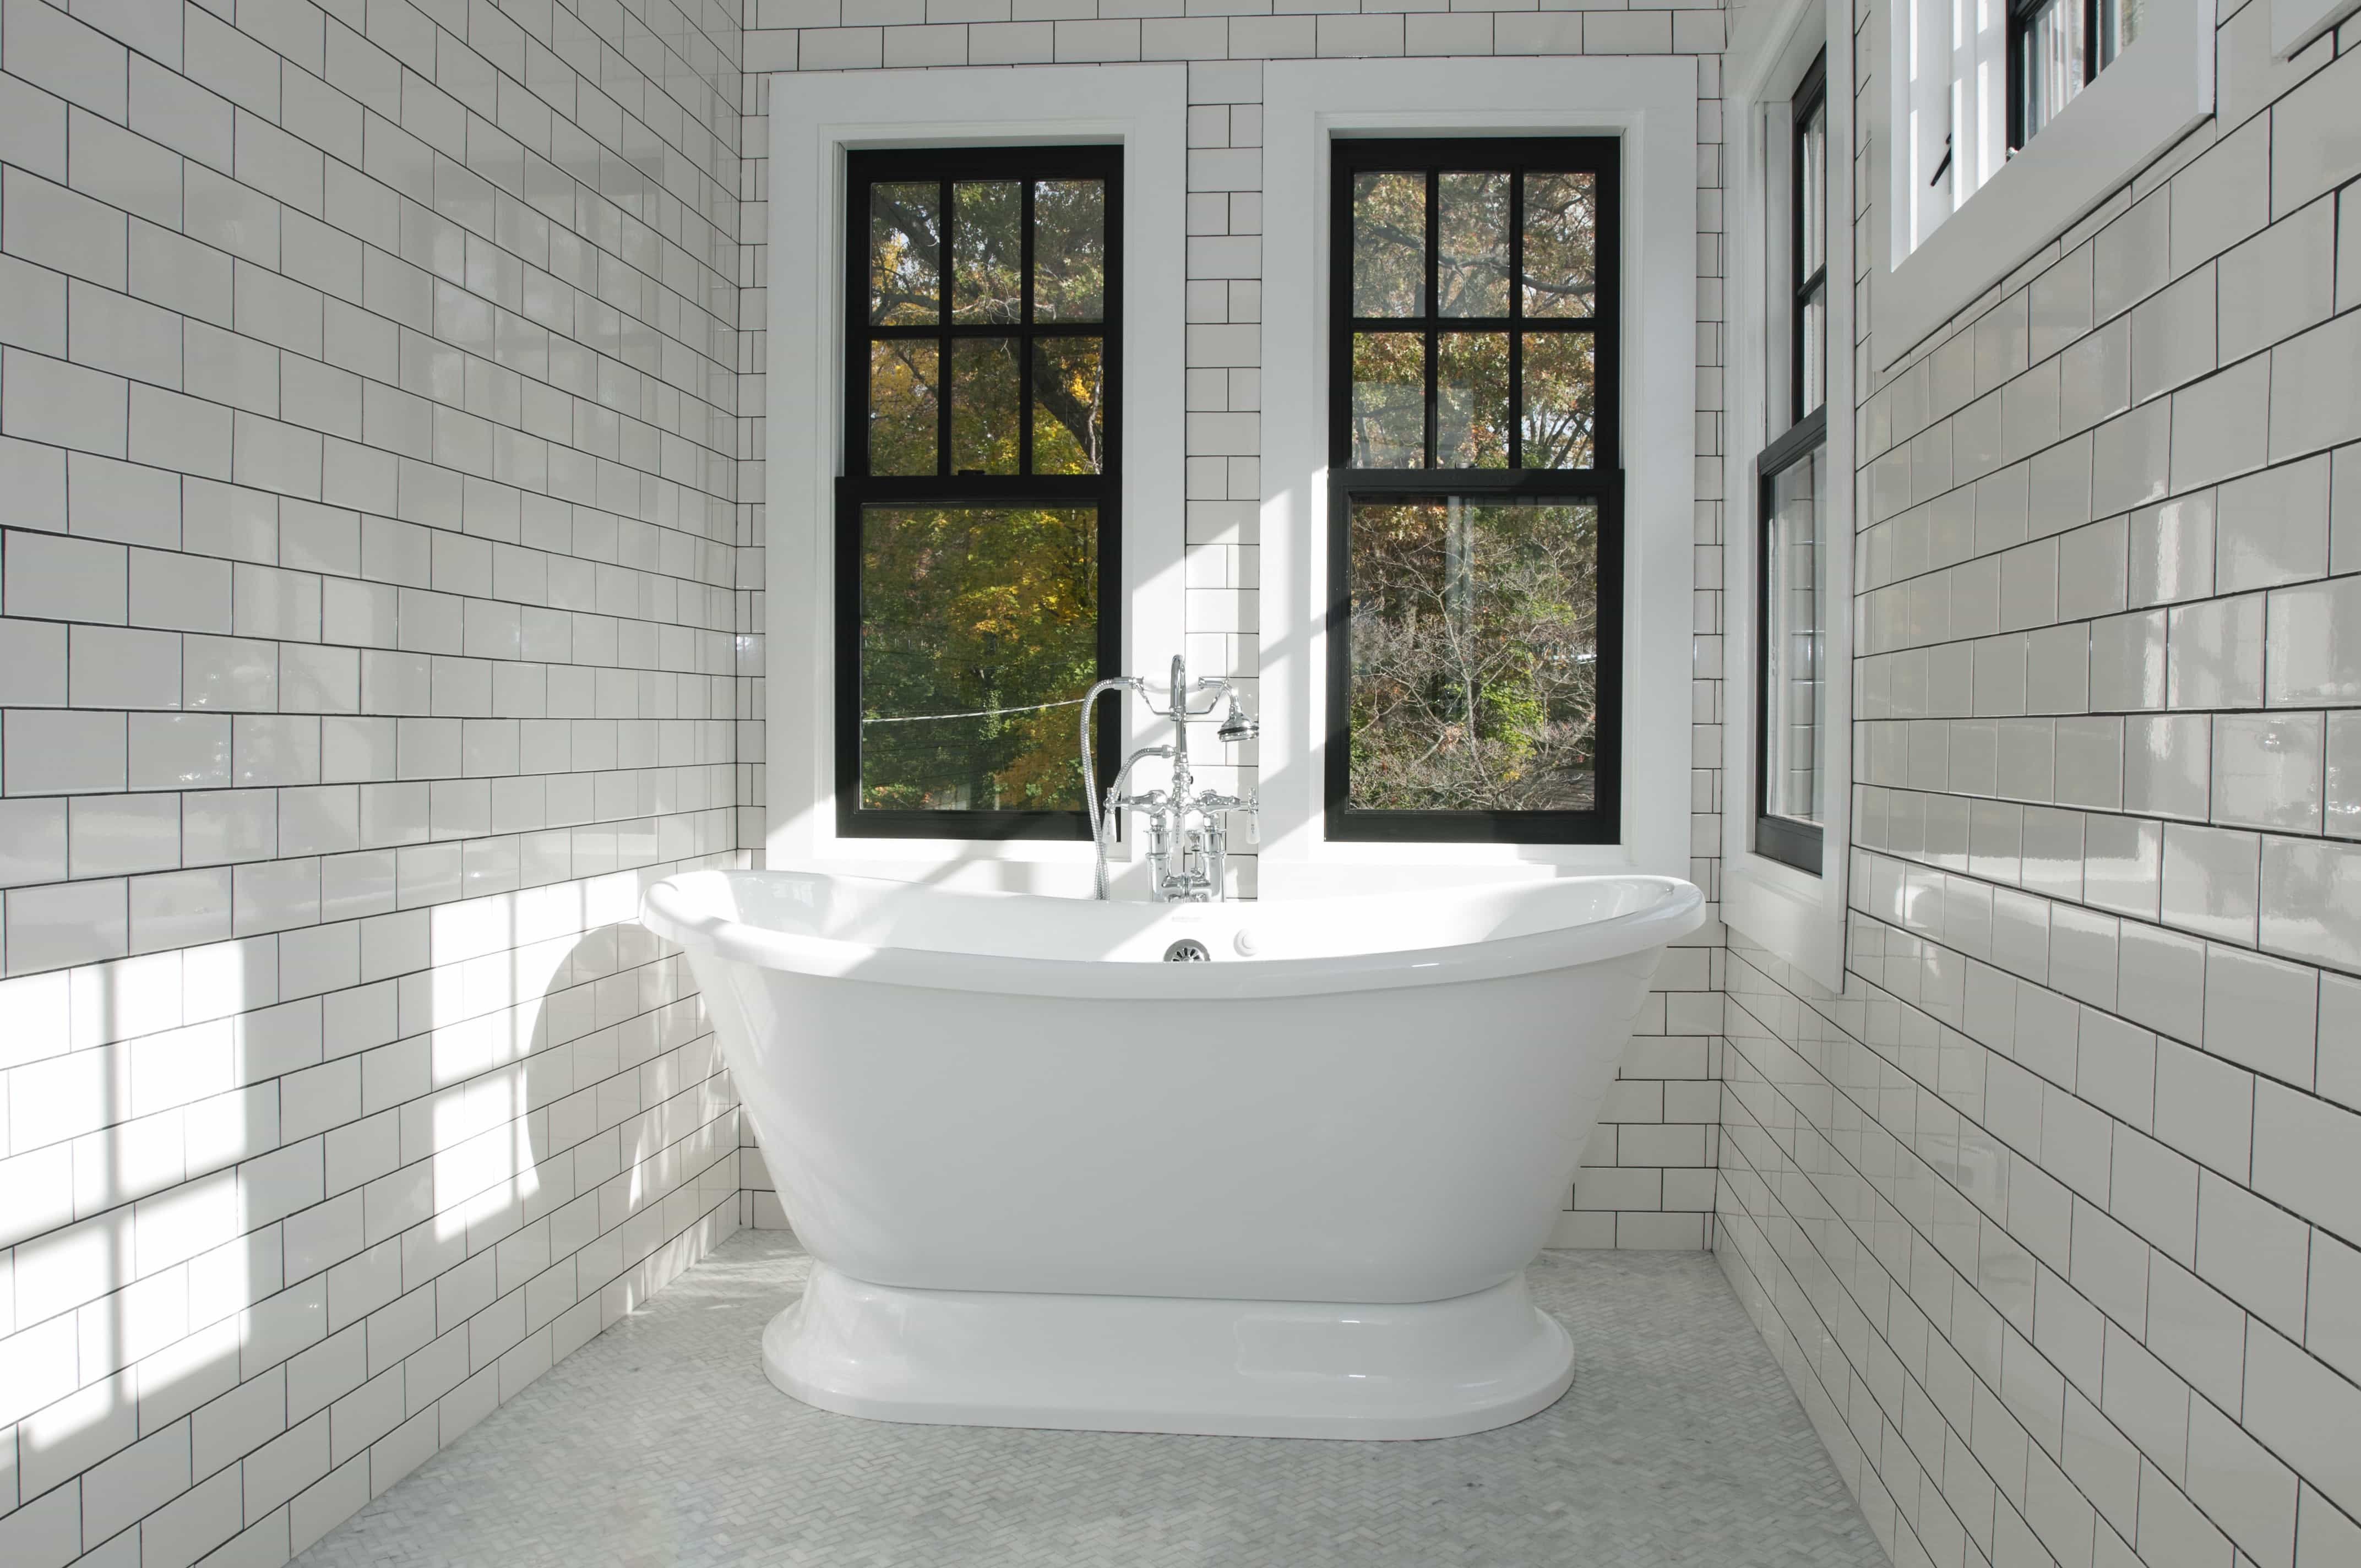 Sleek Tiled Bathroom With Gray Granite Countertops 2017 (Photo 18 of 29)